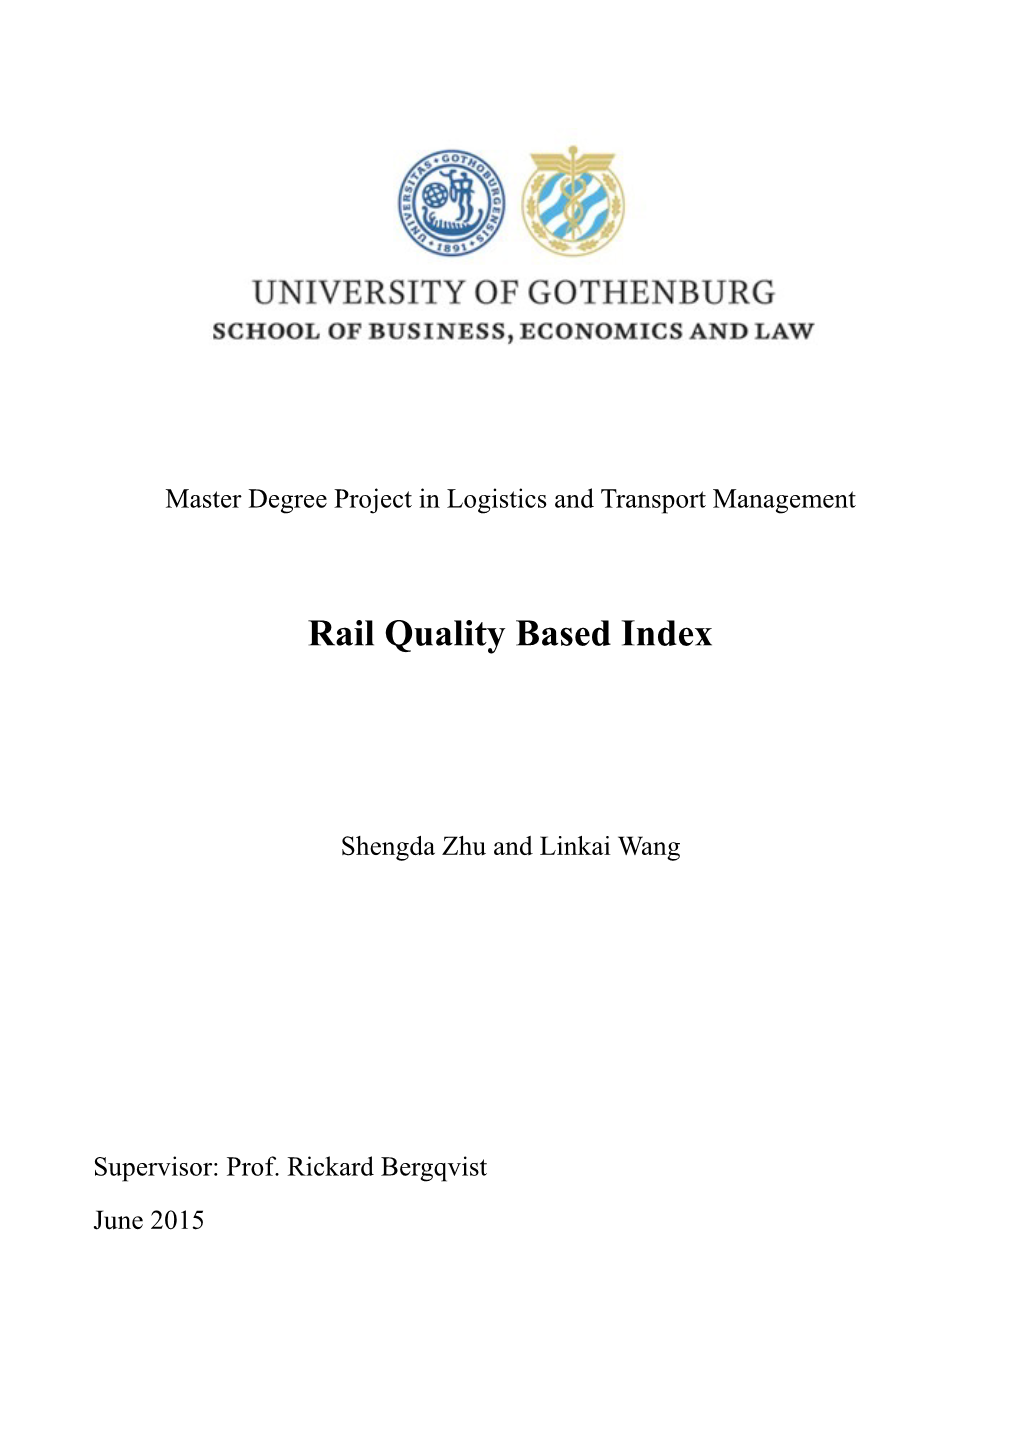 Rail Quality Based Index